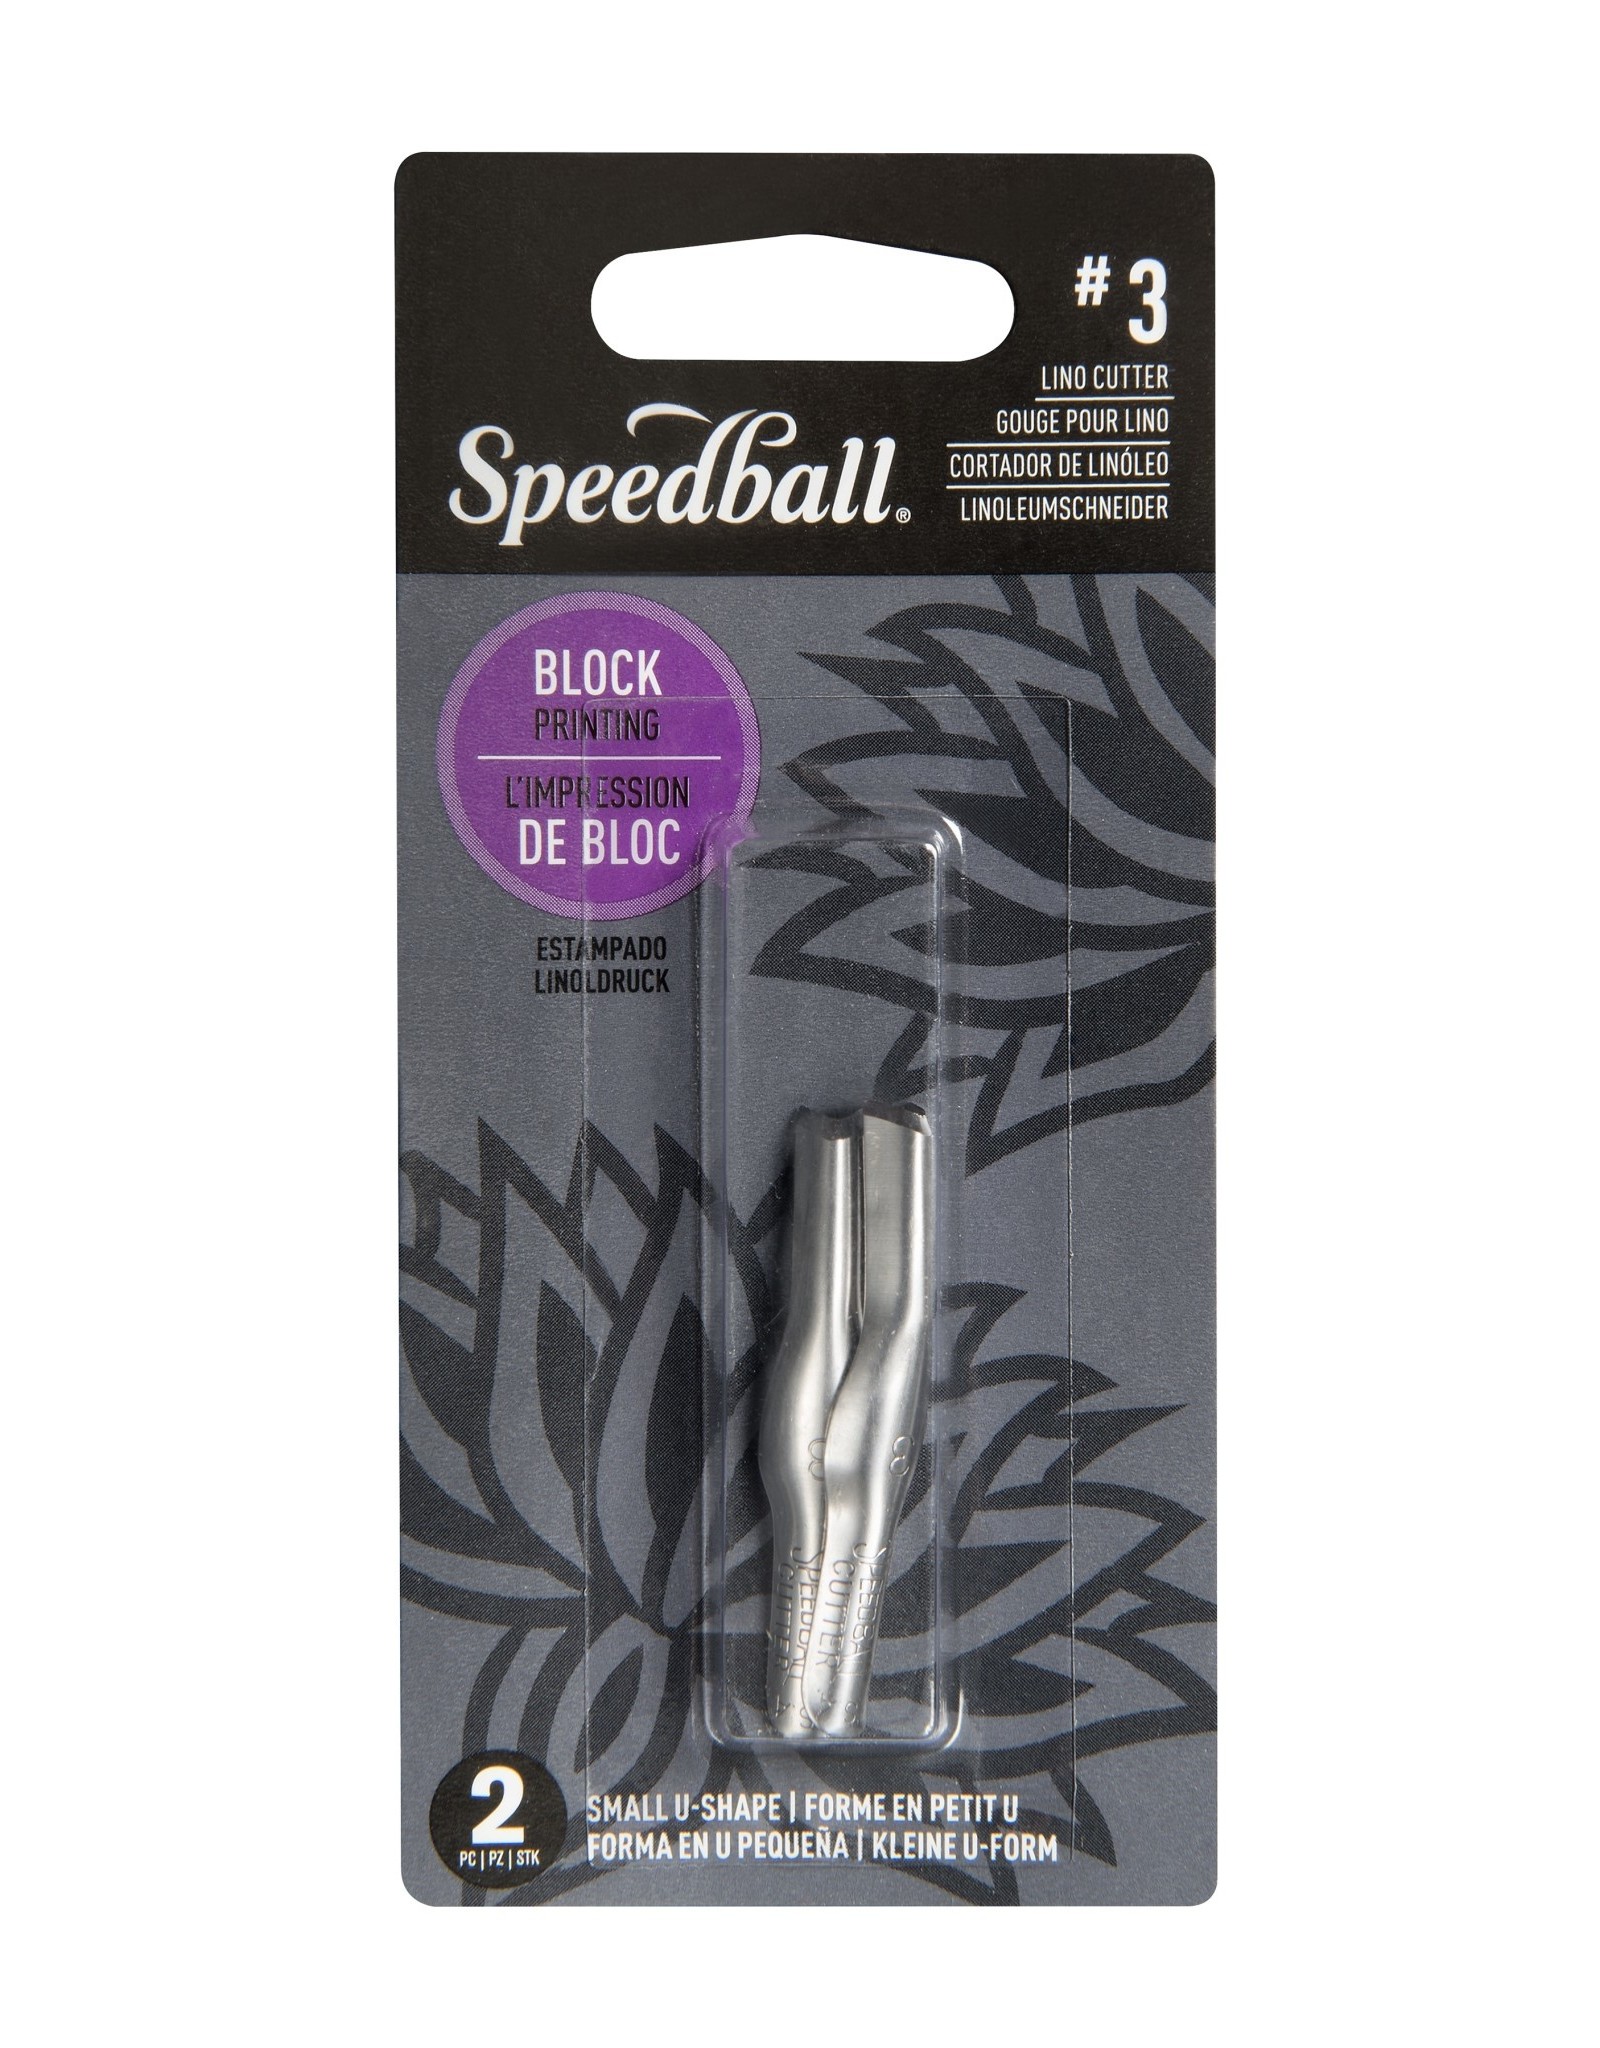 SPEEDBALL ART PRODUCTS Speedball Lino Cutter, #3 Small U Gouge, Set of 2